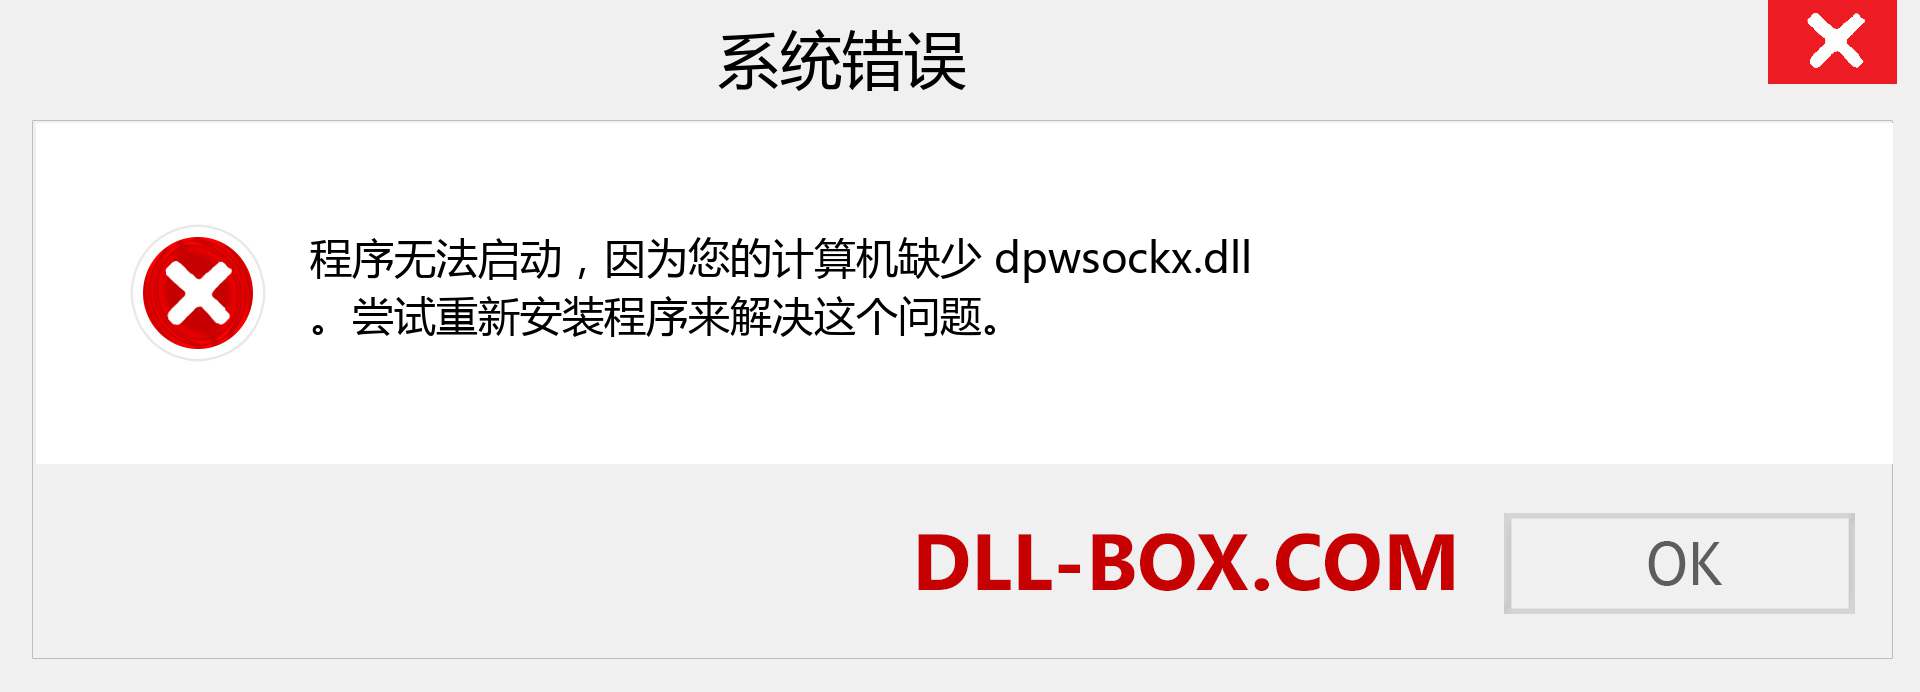 dpwsockx.dll 文件丢失？。 适用于 Windows 7、8、10 的下载 - 修复 Windows、照片、图像上的 dpwsockx dll 丢失错误